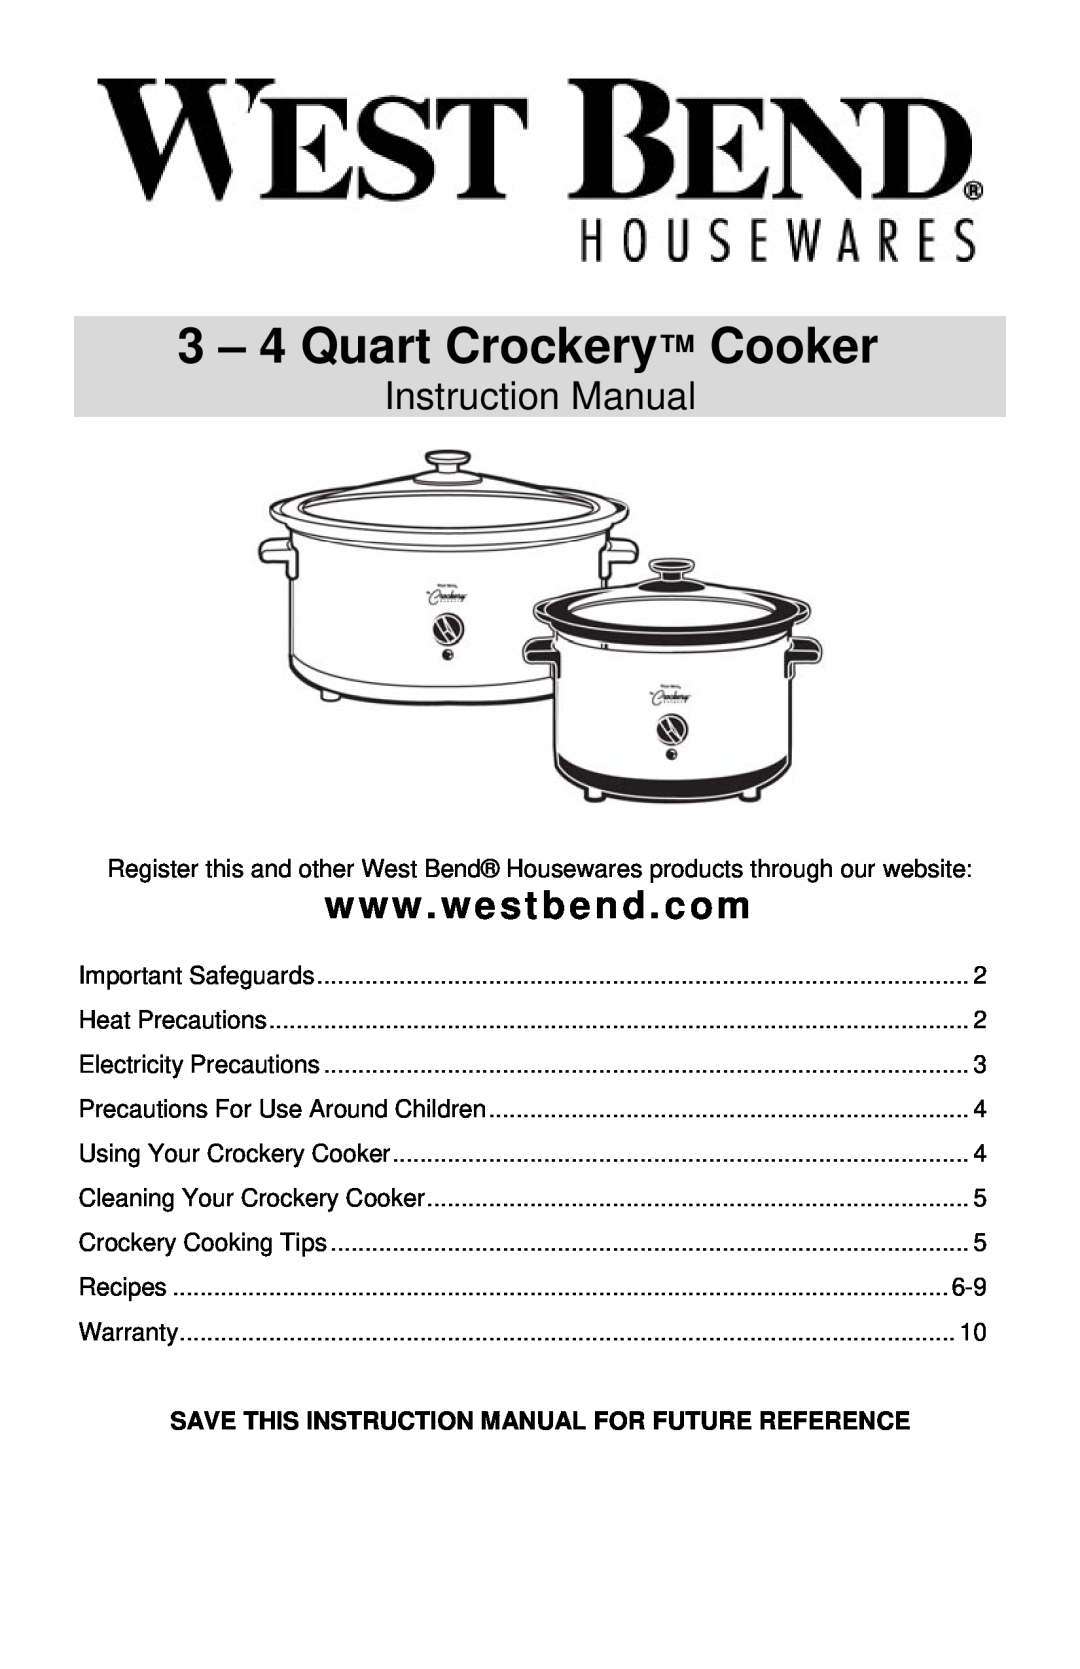 West Bend 3-4 Quart Crockery Cooker instruction manual 3 – 4 Quart Crockery Cooker, Instruction Manual 